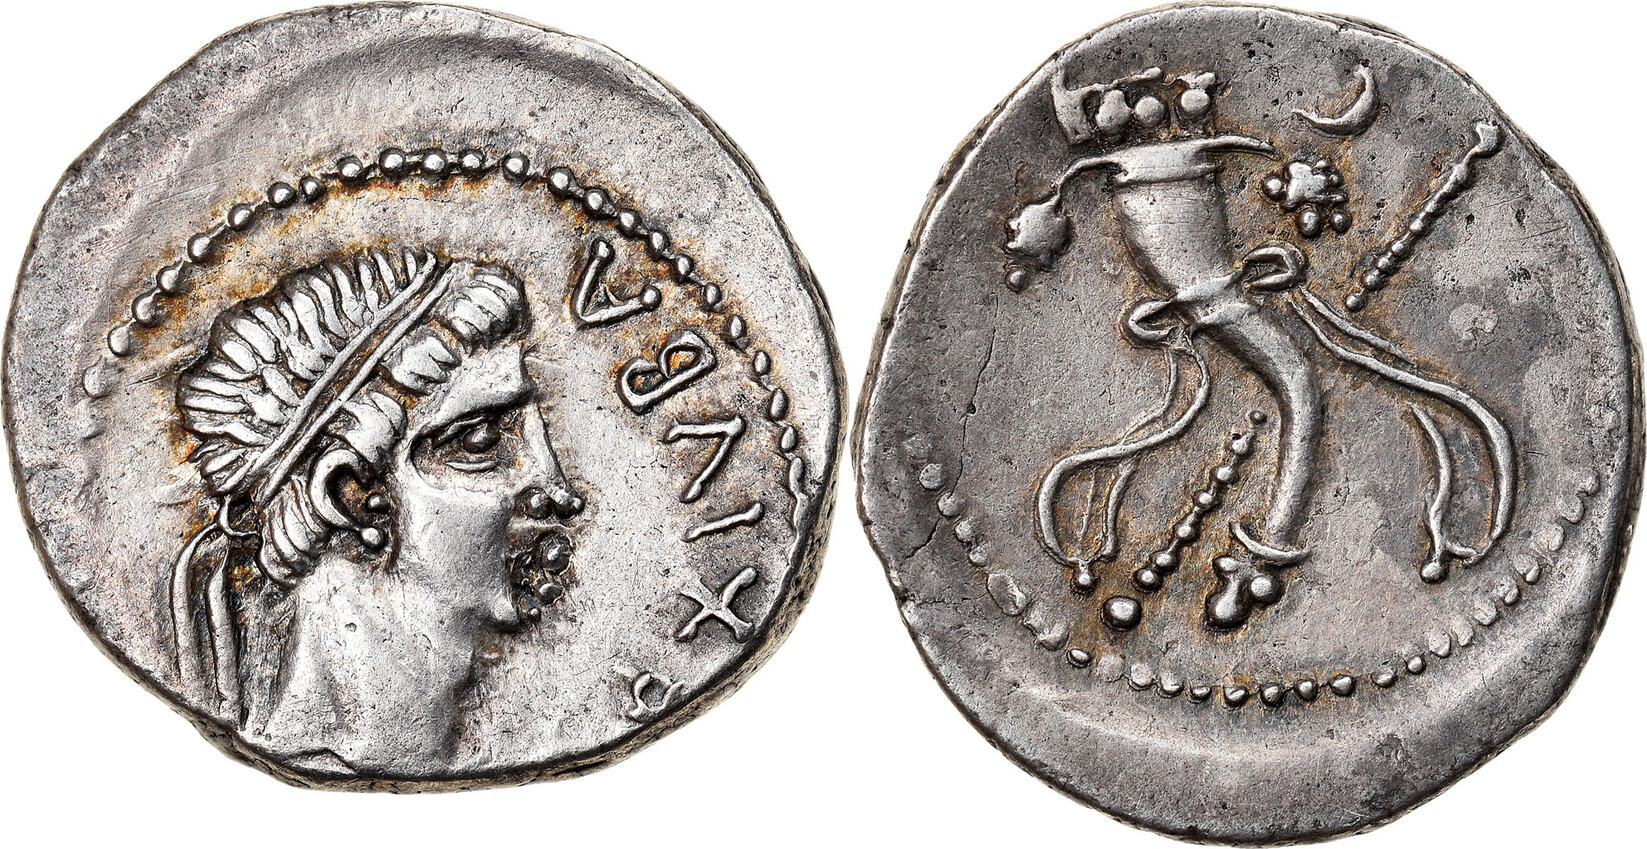 Ch 20 bc 25. Денарий Avgustus. Монеты Кесарии. Динарий арт. Монеты греческой Кесарии.